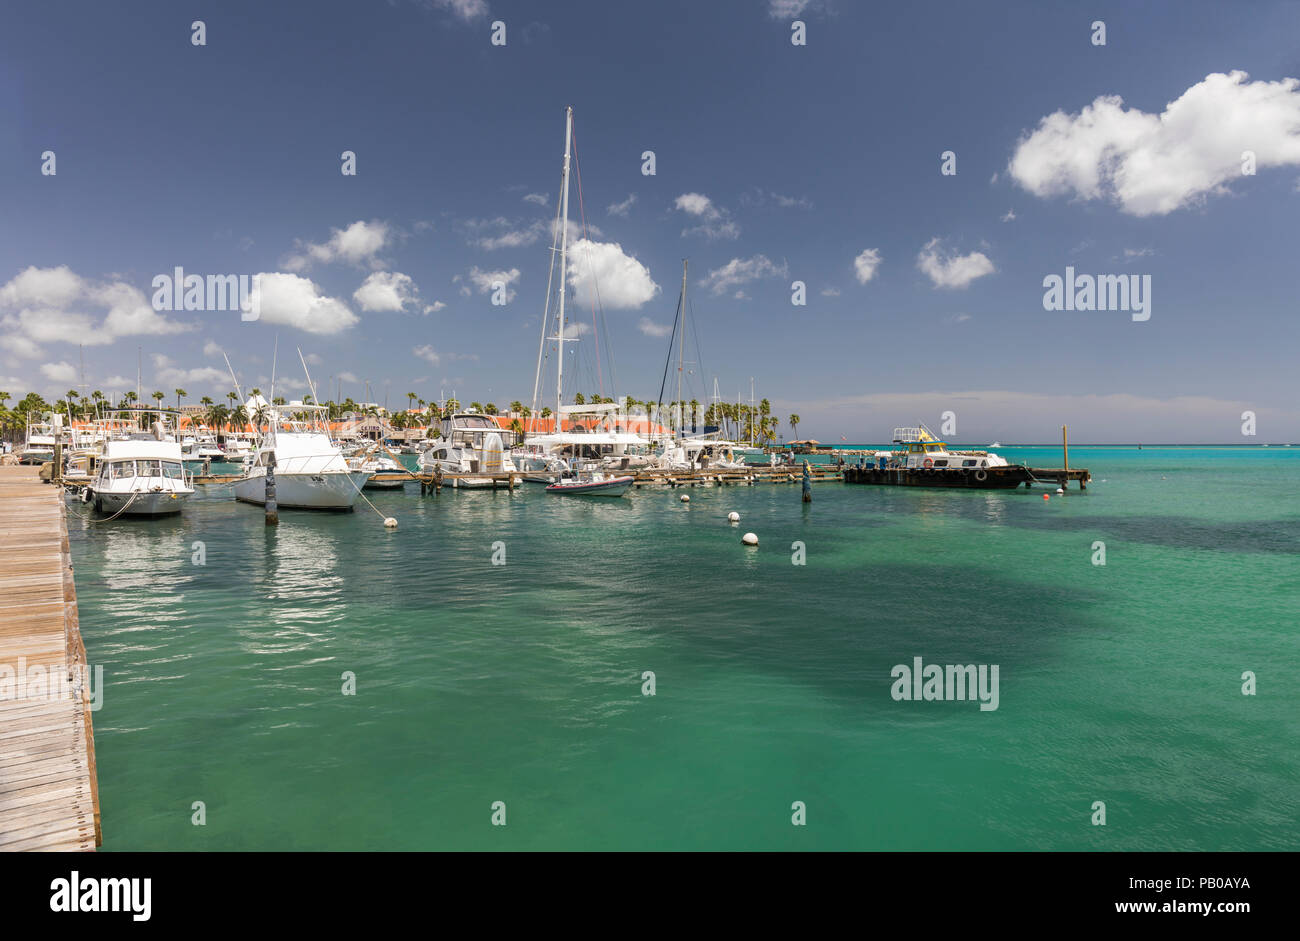 Boats moored in the turquoise Caribbean sea in Oranjestad harbour area, Aruba, Caribbean Stock Photo